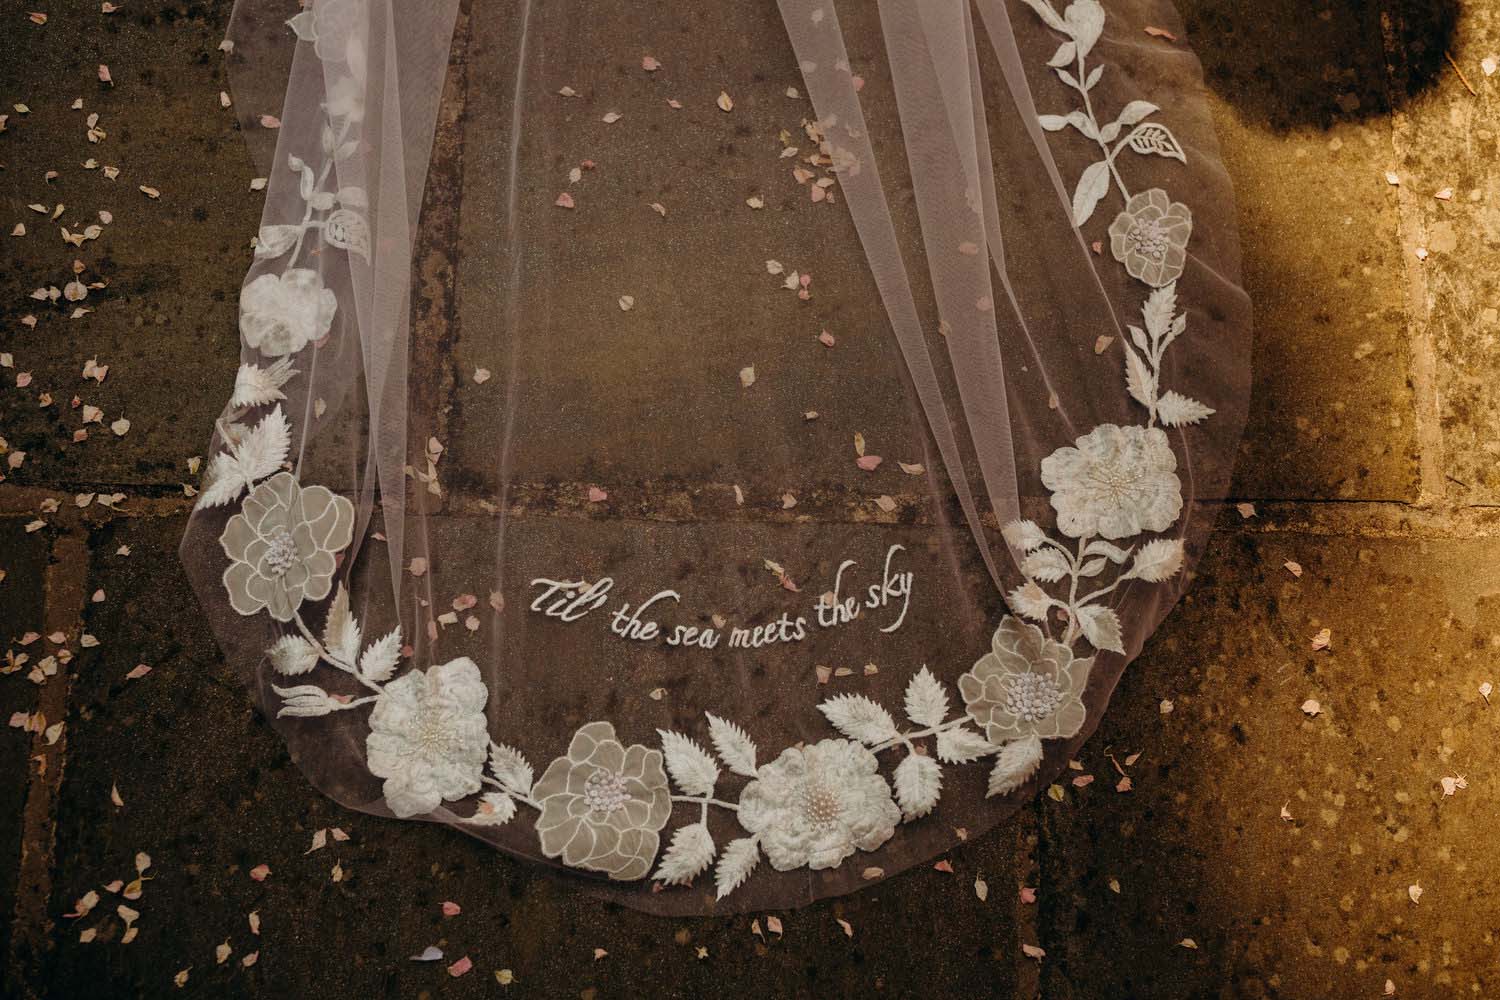 embroidery on wedding veil in dappled sunlight